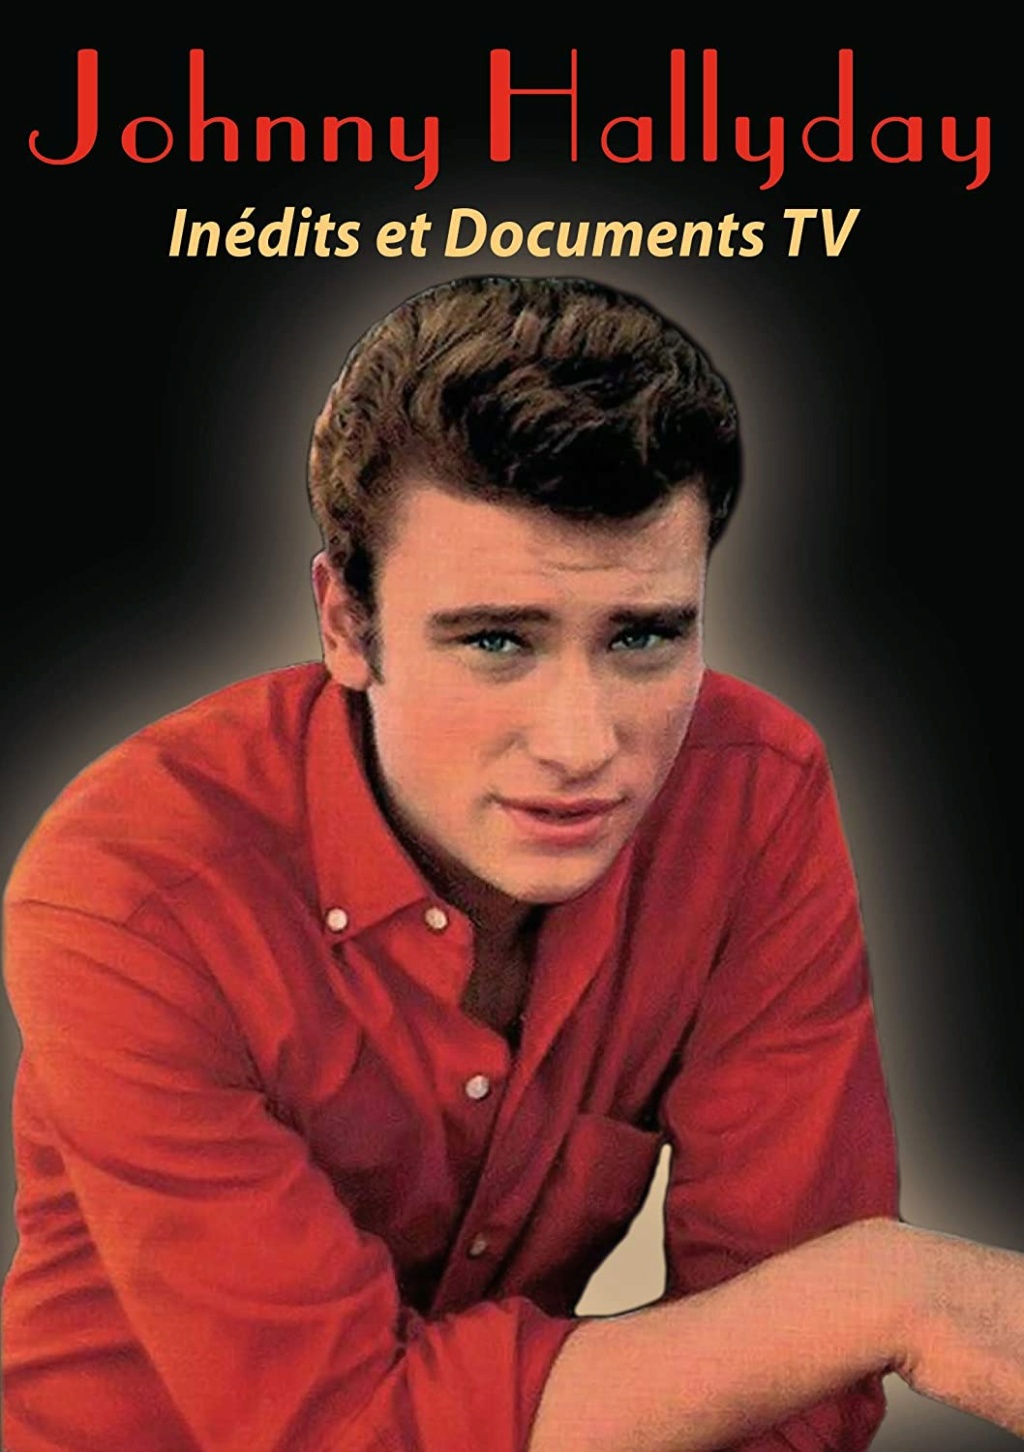 Johnny Hallyday - Inédits et Documents TV - DVD 71lvci10